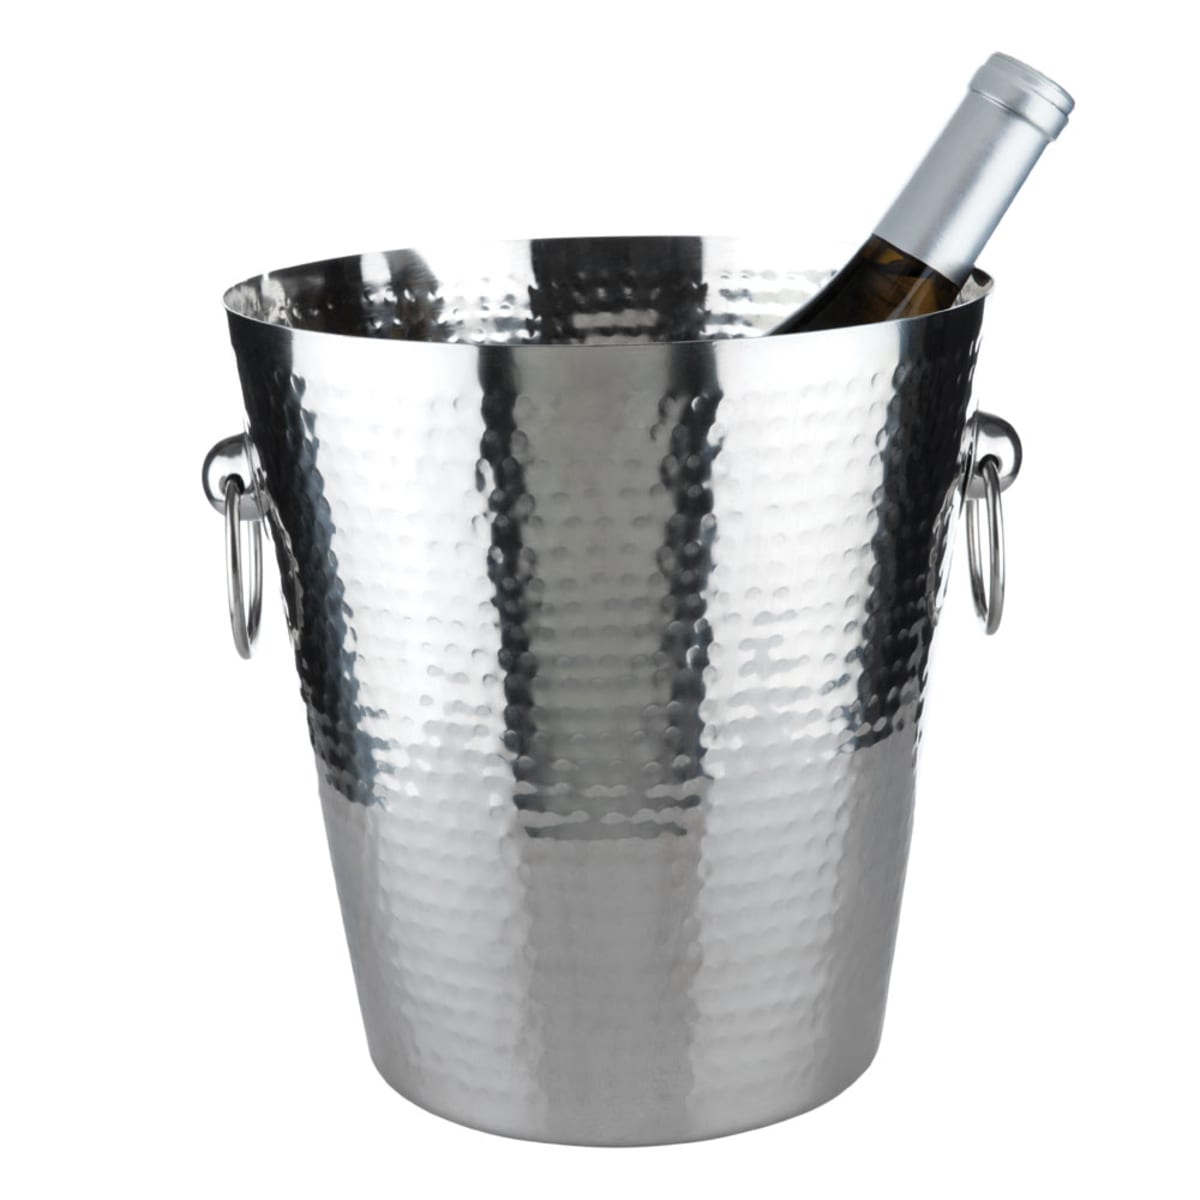 wine.com Viski Hammered Stainless-Steel Ice Bucket  Gift Product Image